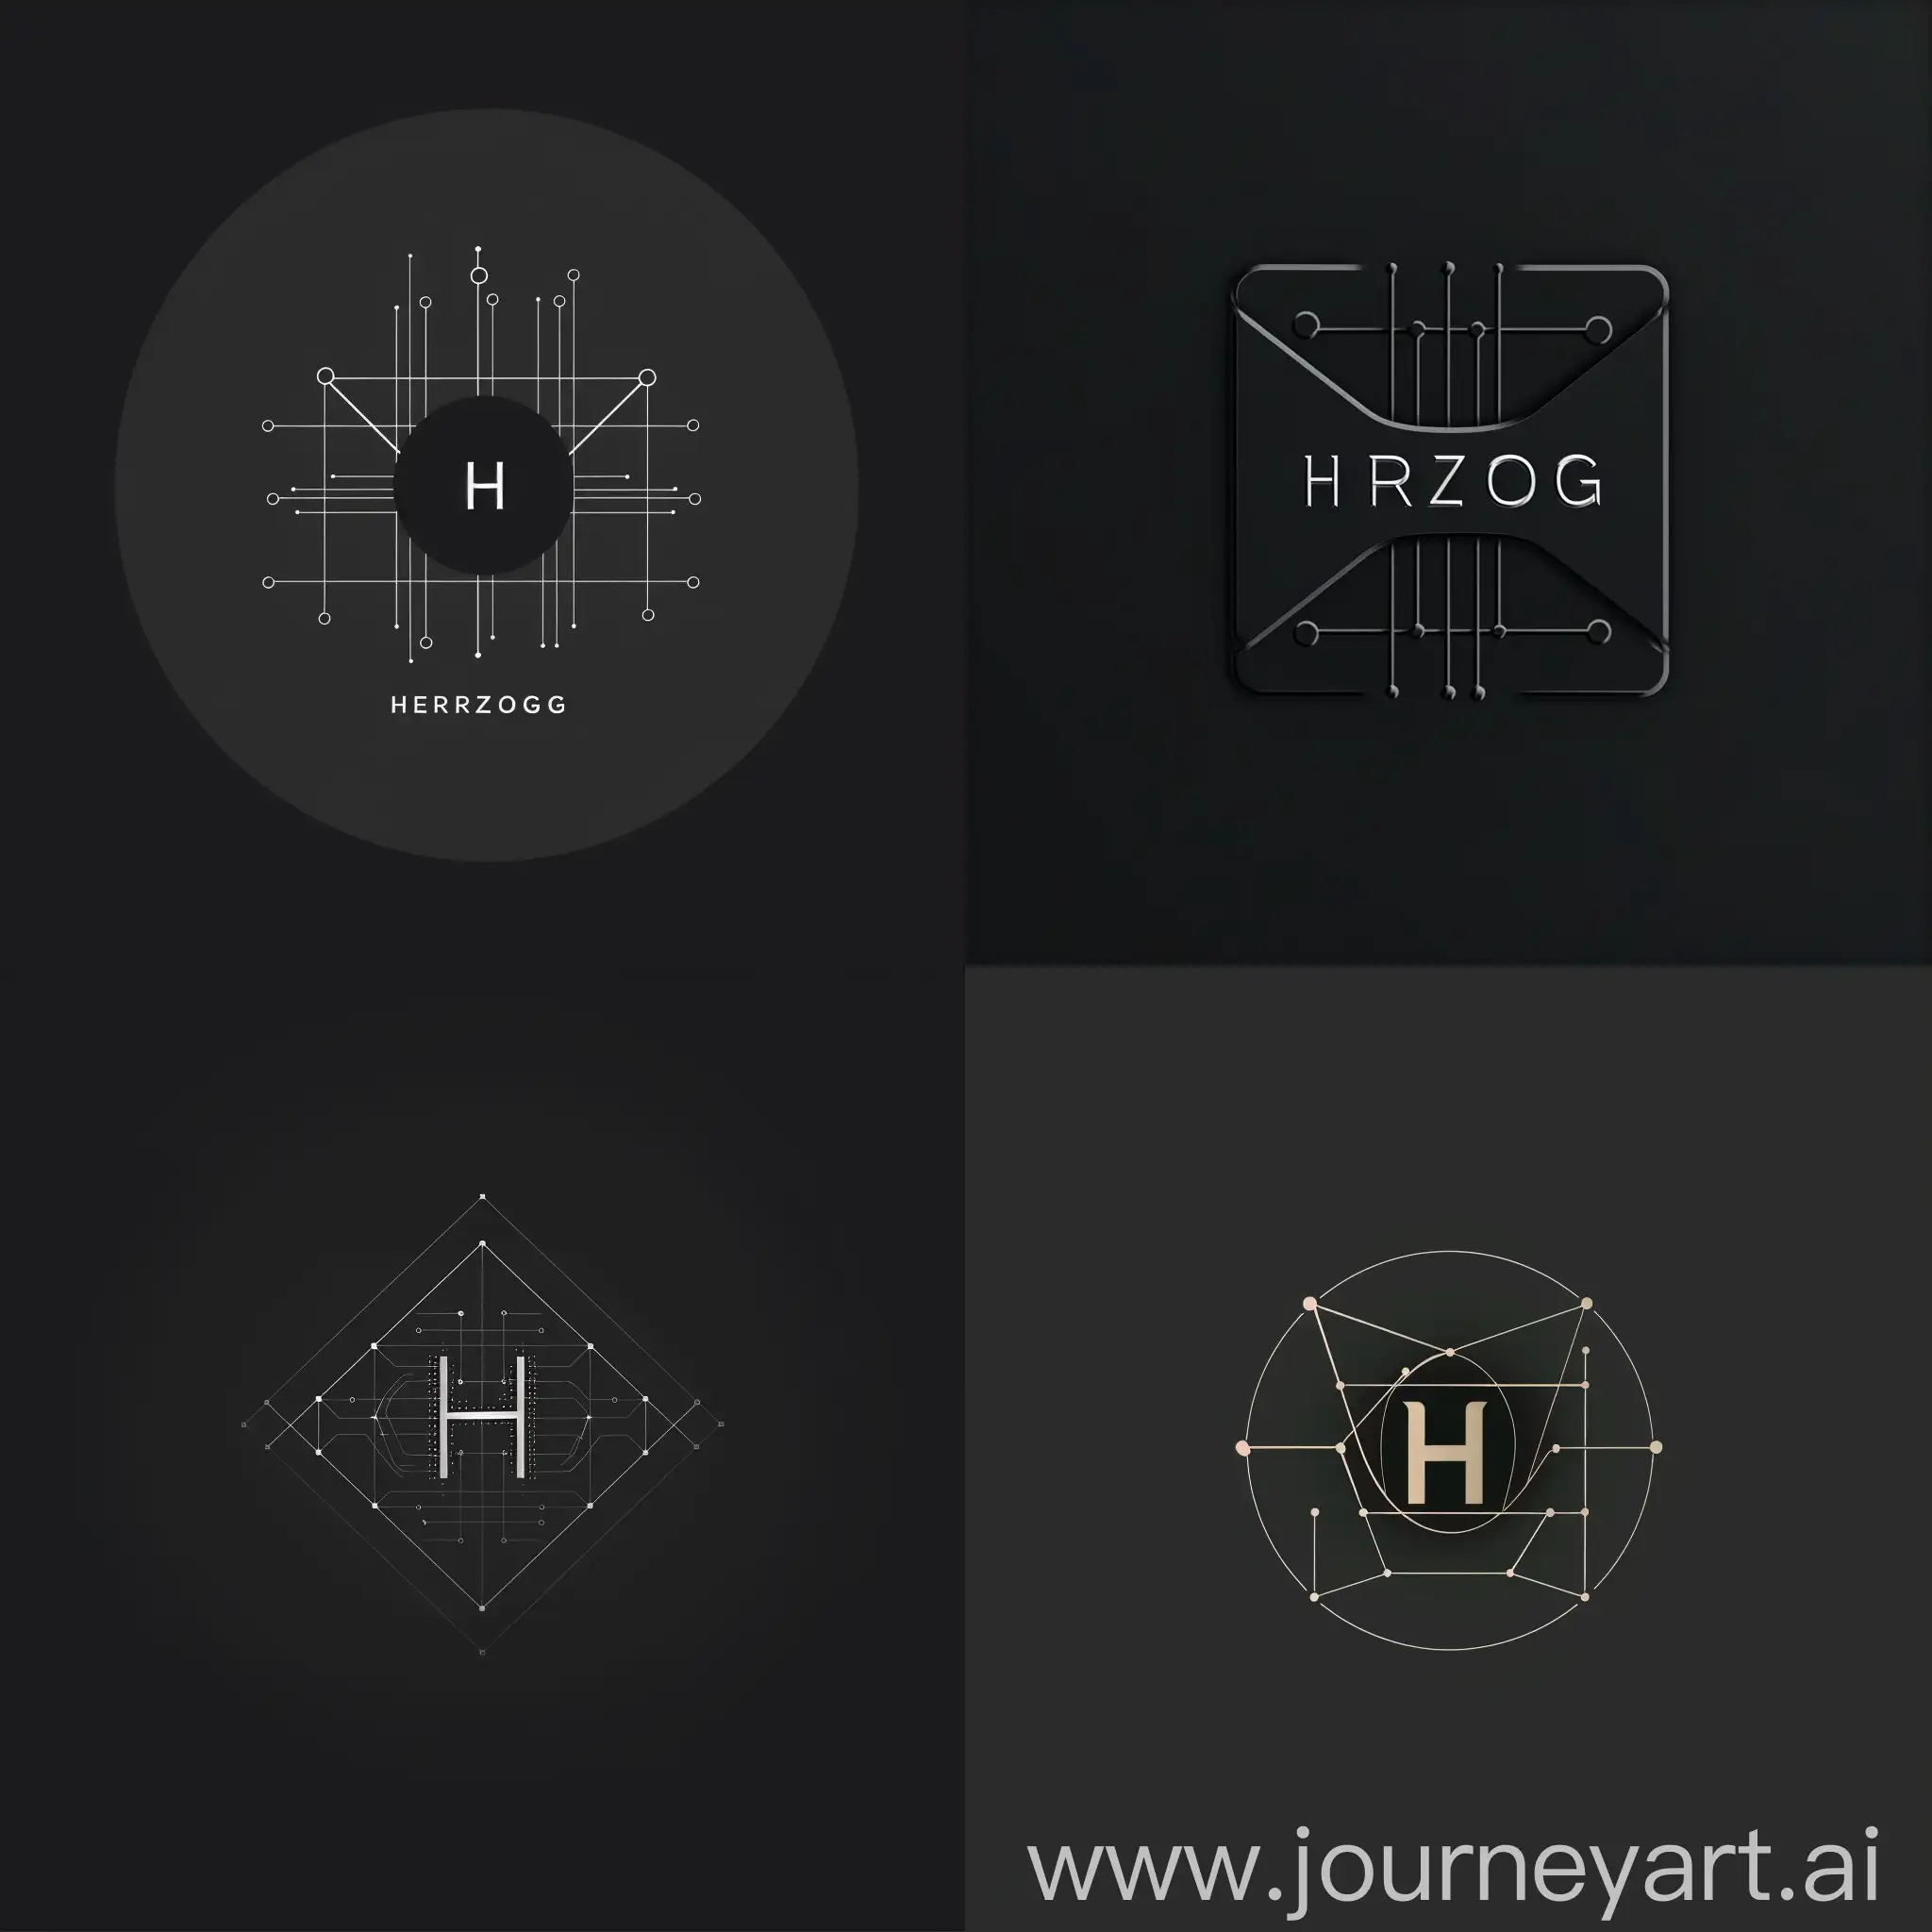 Elegant-Dark-Minimalist-Logo-Design-for-HERZOG-IT-Company-with-NetworkInspired-H